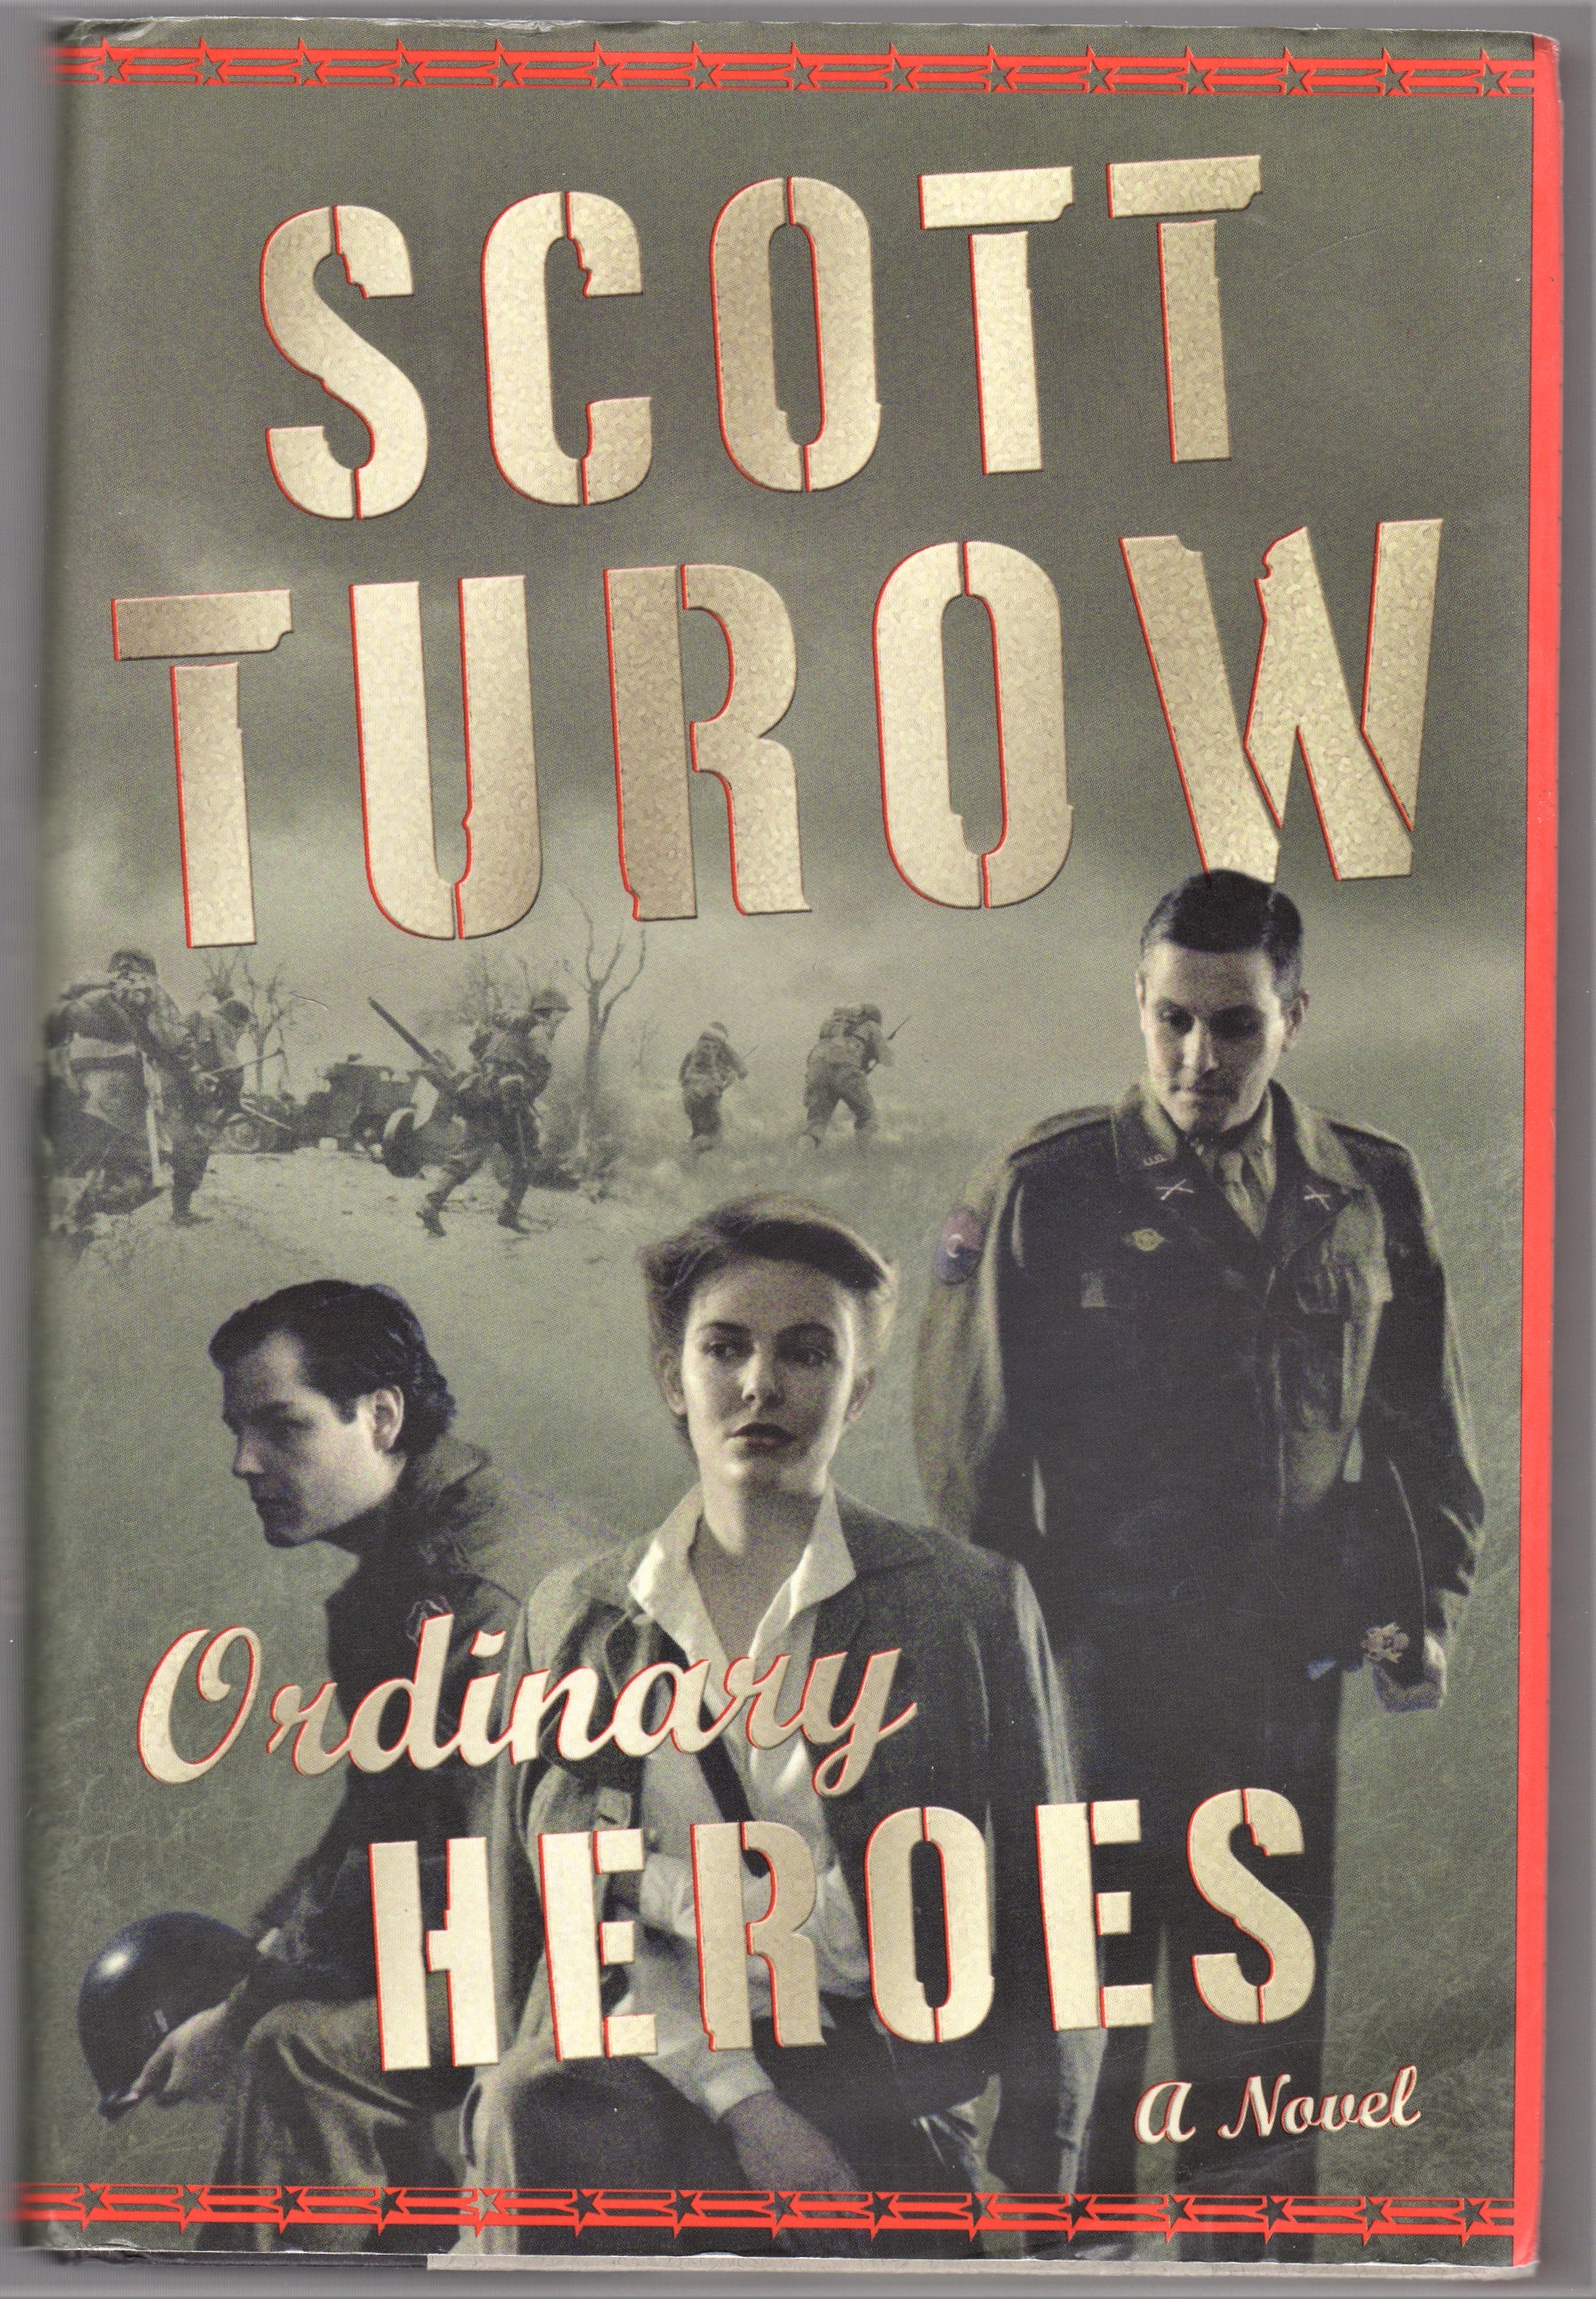 Ordinary Heroes: A Novel - Turow, Scott